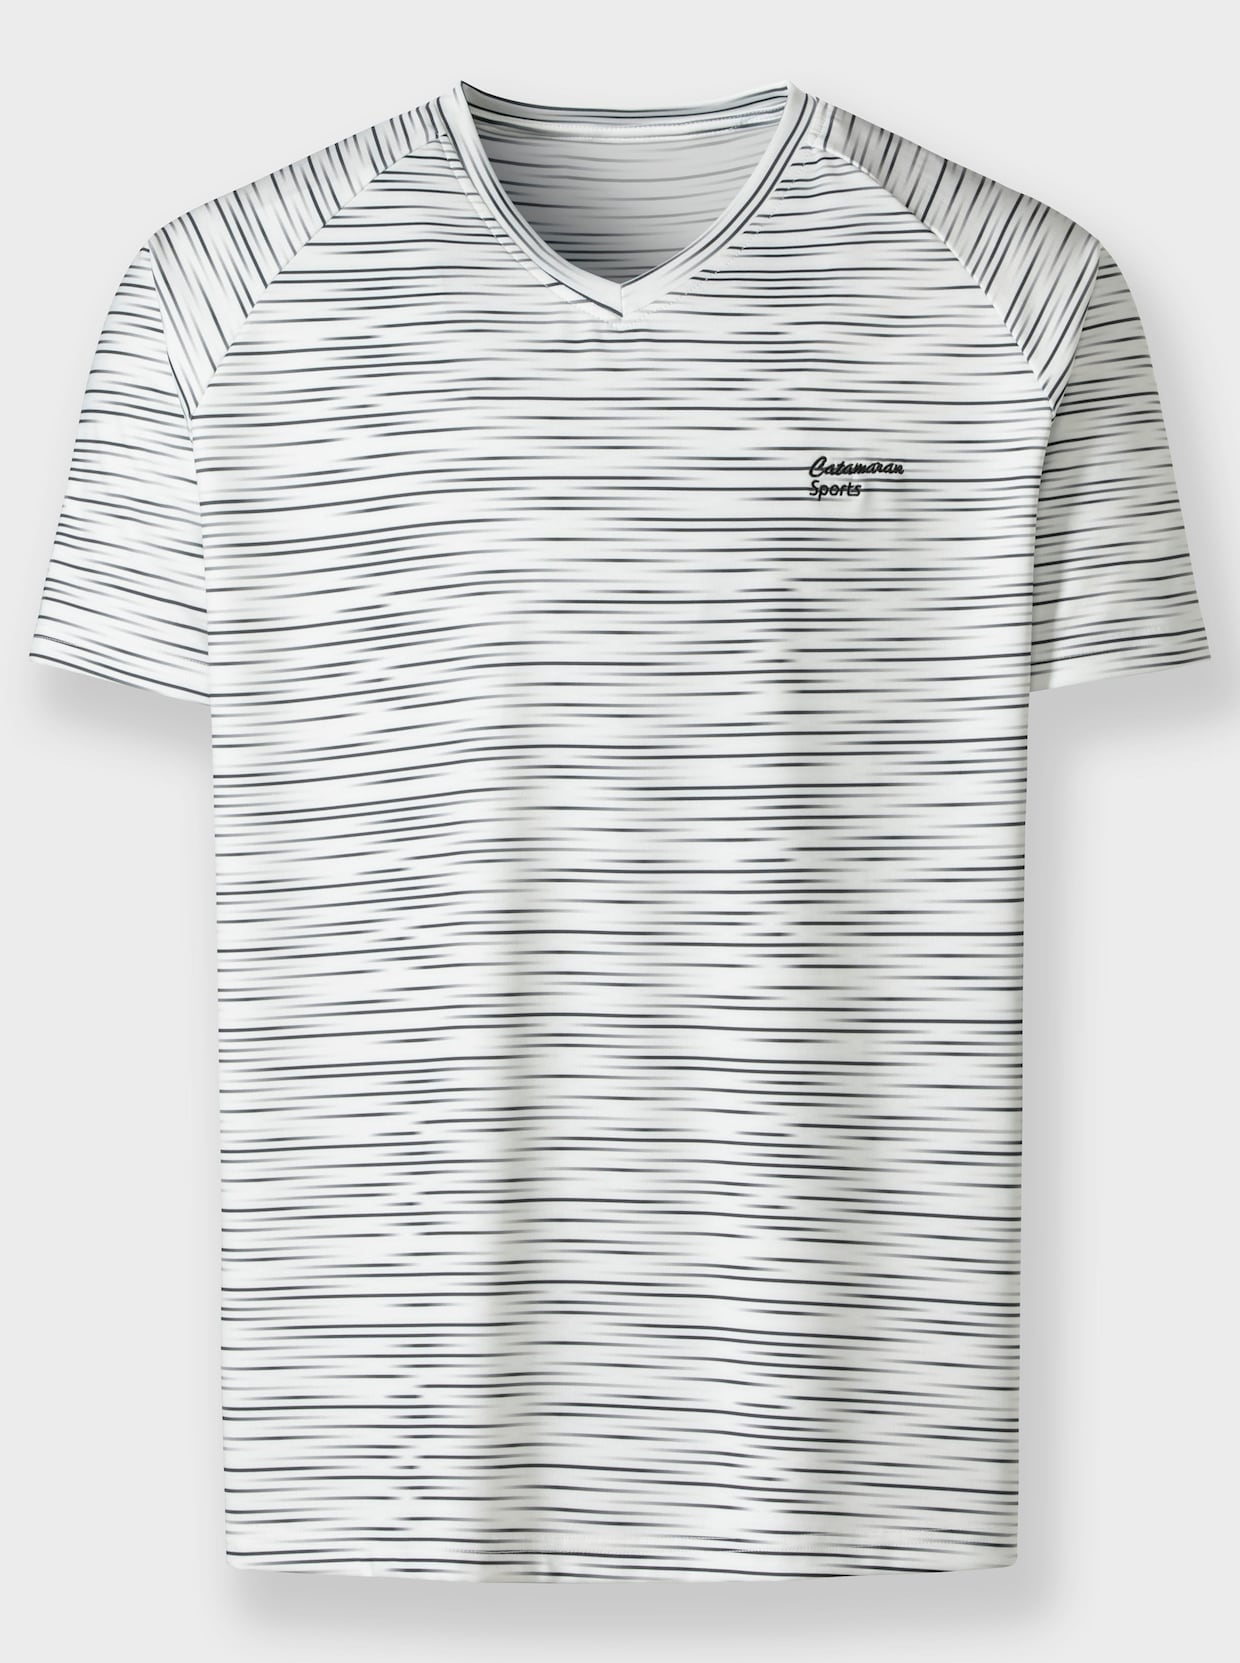 Catamaran Sports Funktions-Shirt - weiß